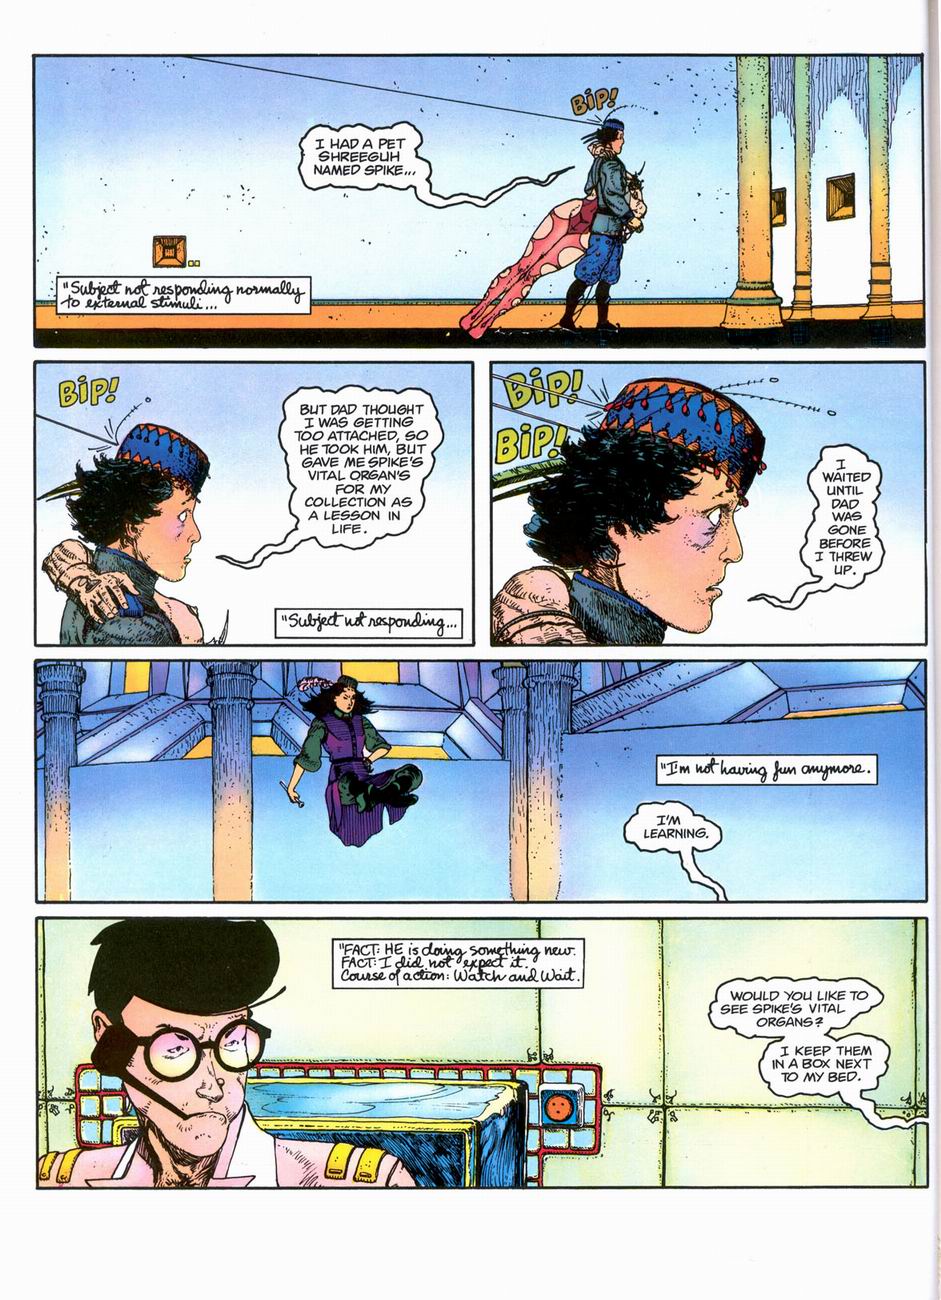 Marvel Graphic Novel issue 13 - Starstruck - Page 17